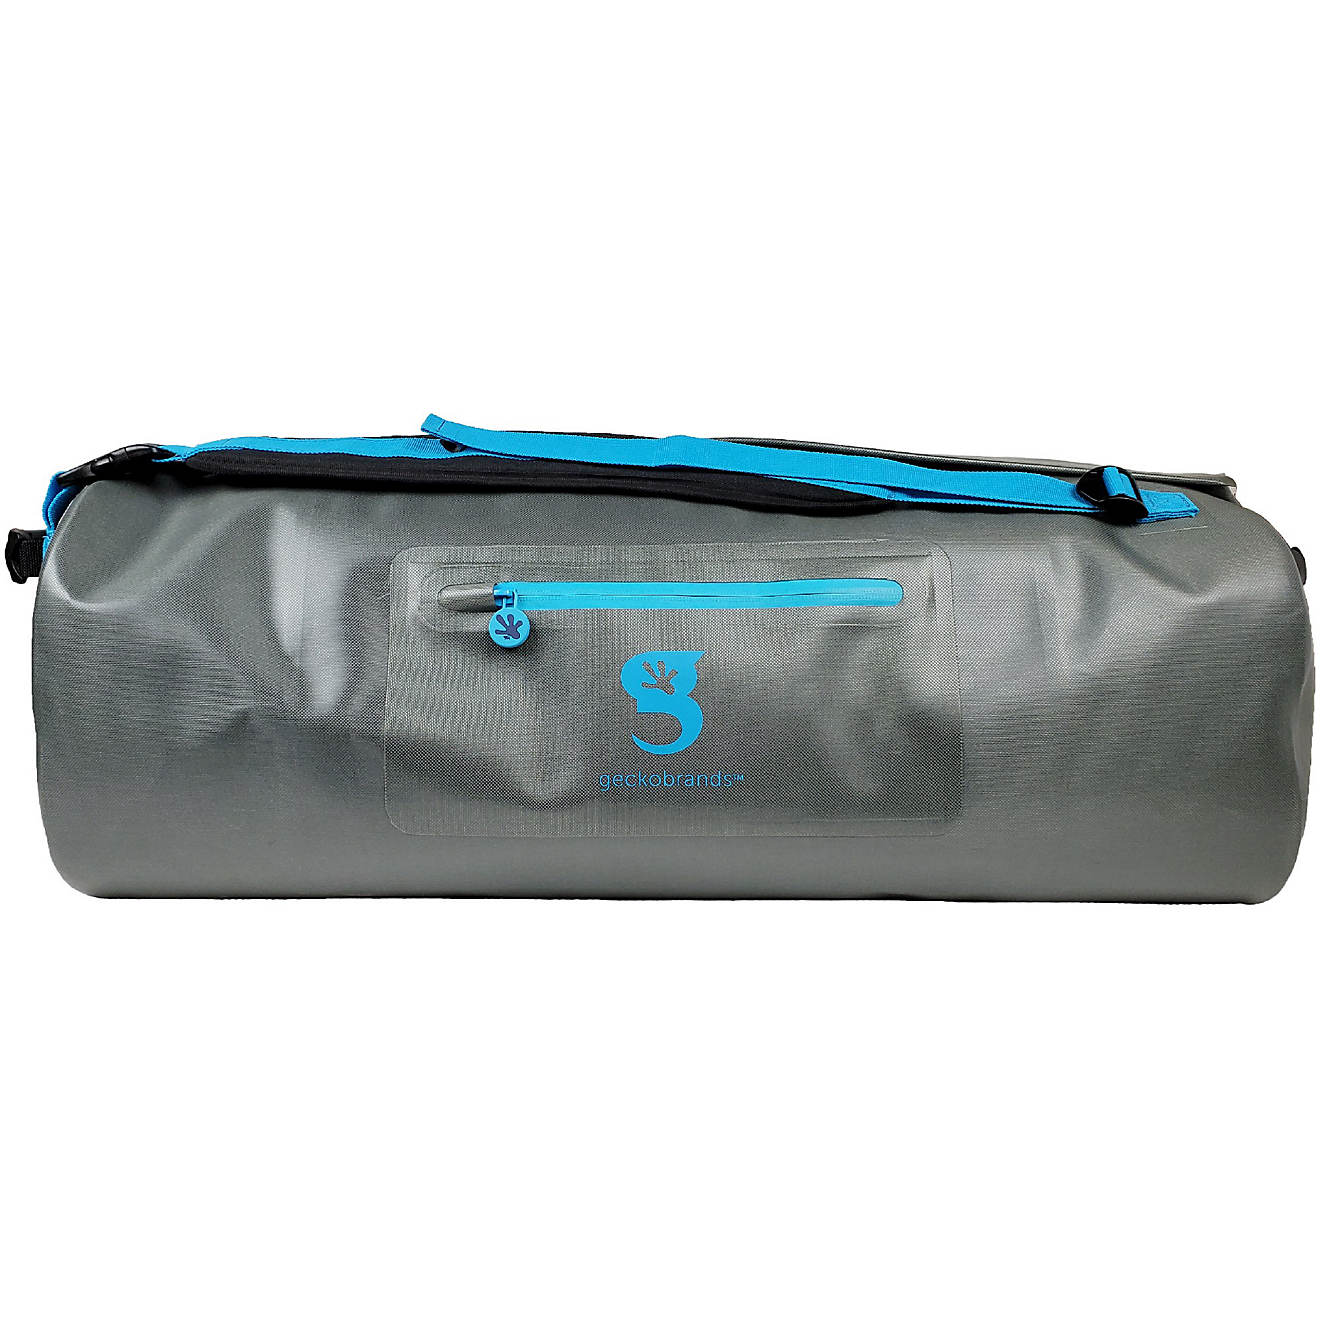 geckobrands Optixtreme Waterproof Duffel Bag                                                                                     - view number 1